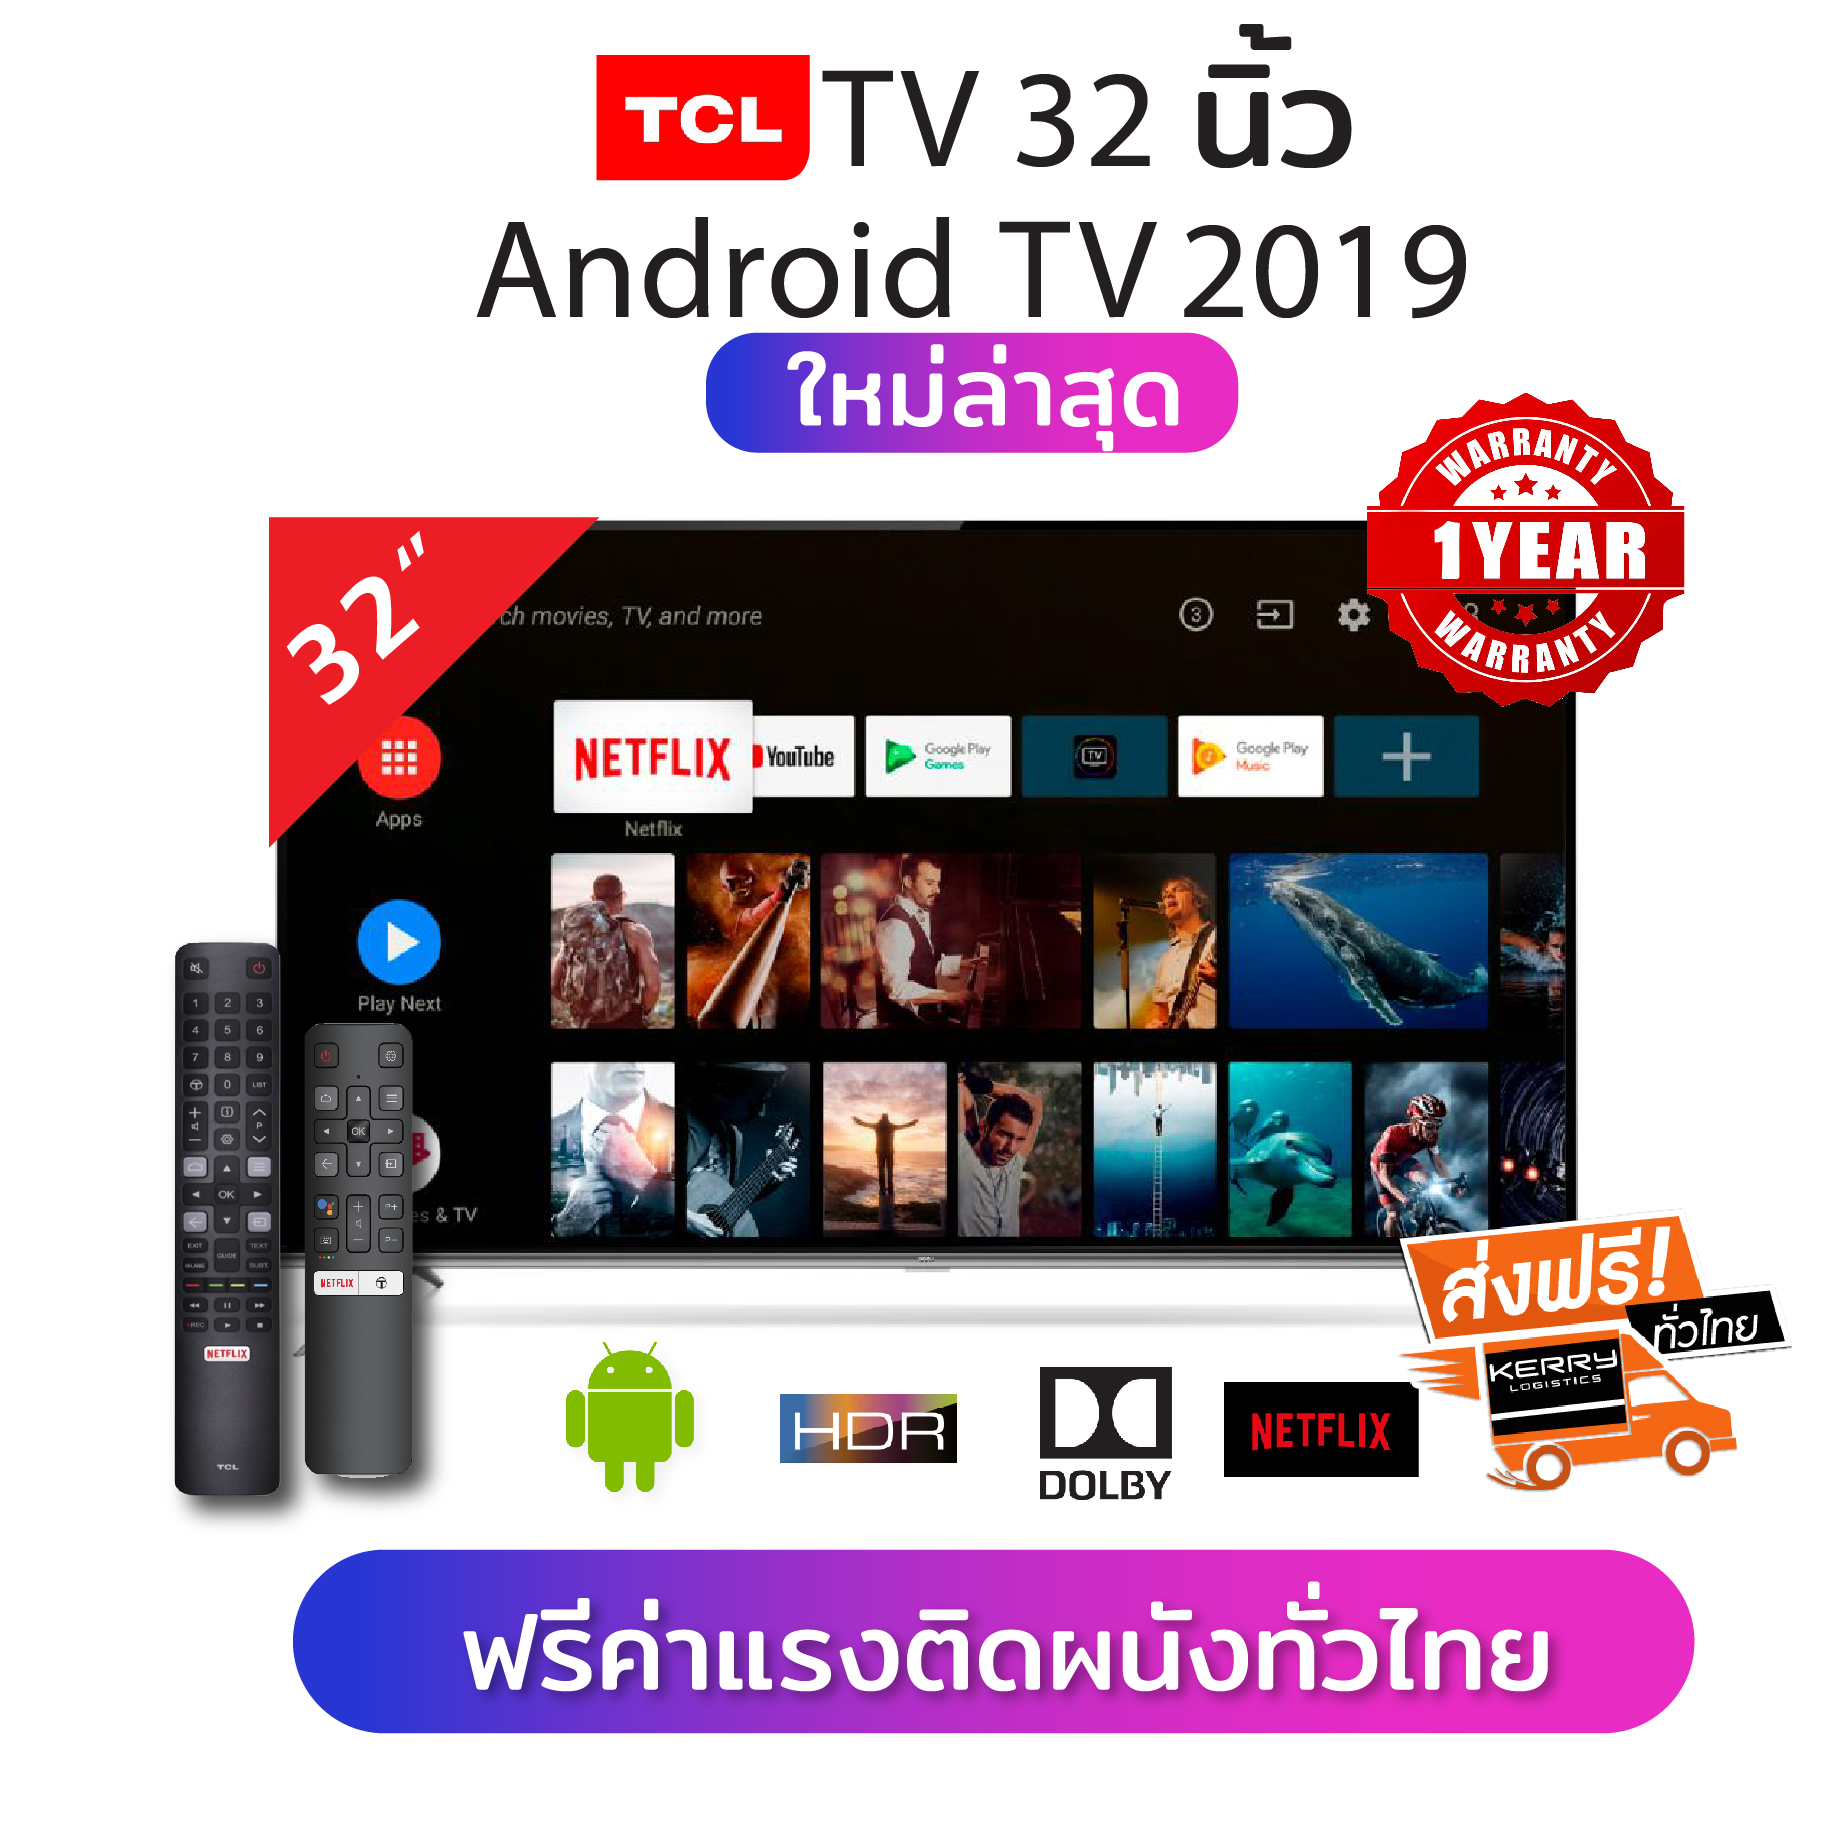 TCL 32S65A Android Smart TV แอนดรอยด์ทีวี 32นิ้ว  Android 8.0  ทีวีดูNetflix Youtube คมชัด เสียงดี ฟรีค่าติดตั้งผนัง Wifi HD 720PSmart TV รองรับ USB HDMI แถมฟรี Voice Search remote / Android TV คุ้ม ราคาถูก